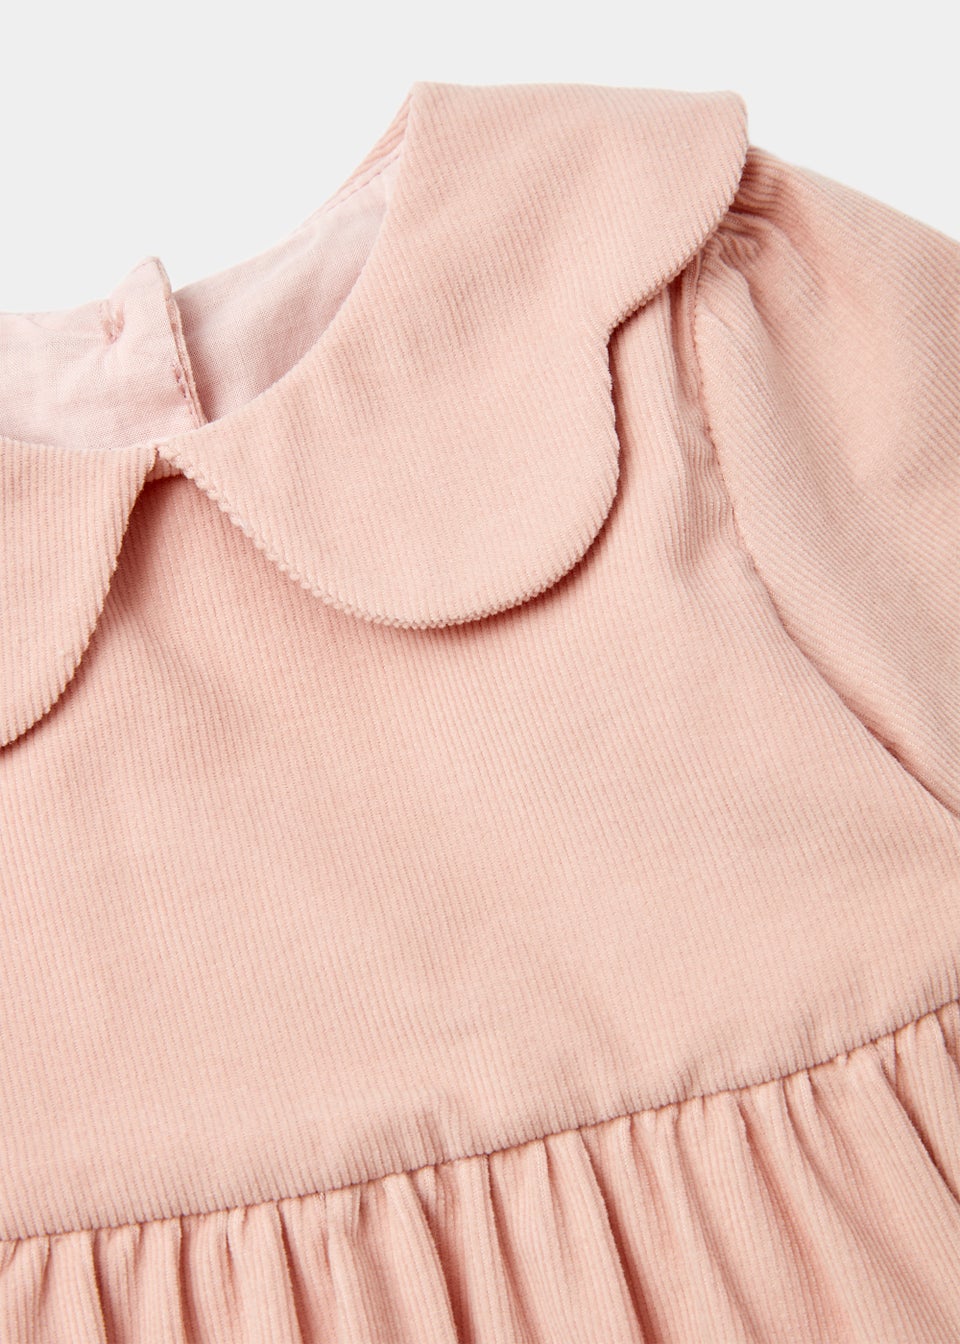 Baby Pink Cord Scallop Collar Dress & Cream Tights Set (Newborn-18mths)